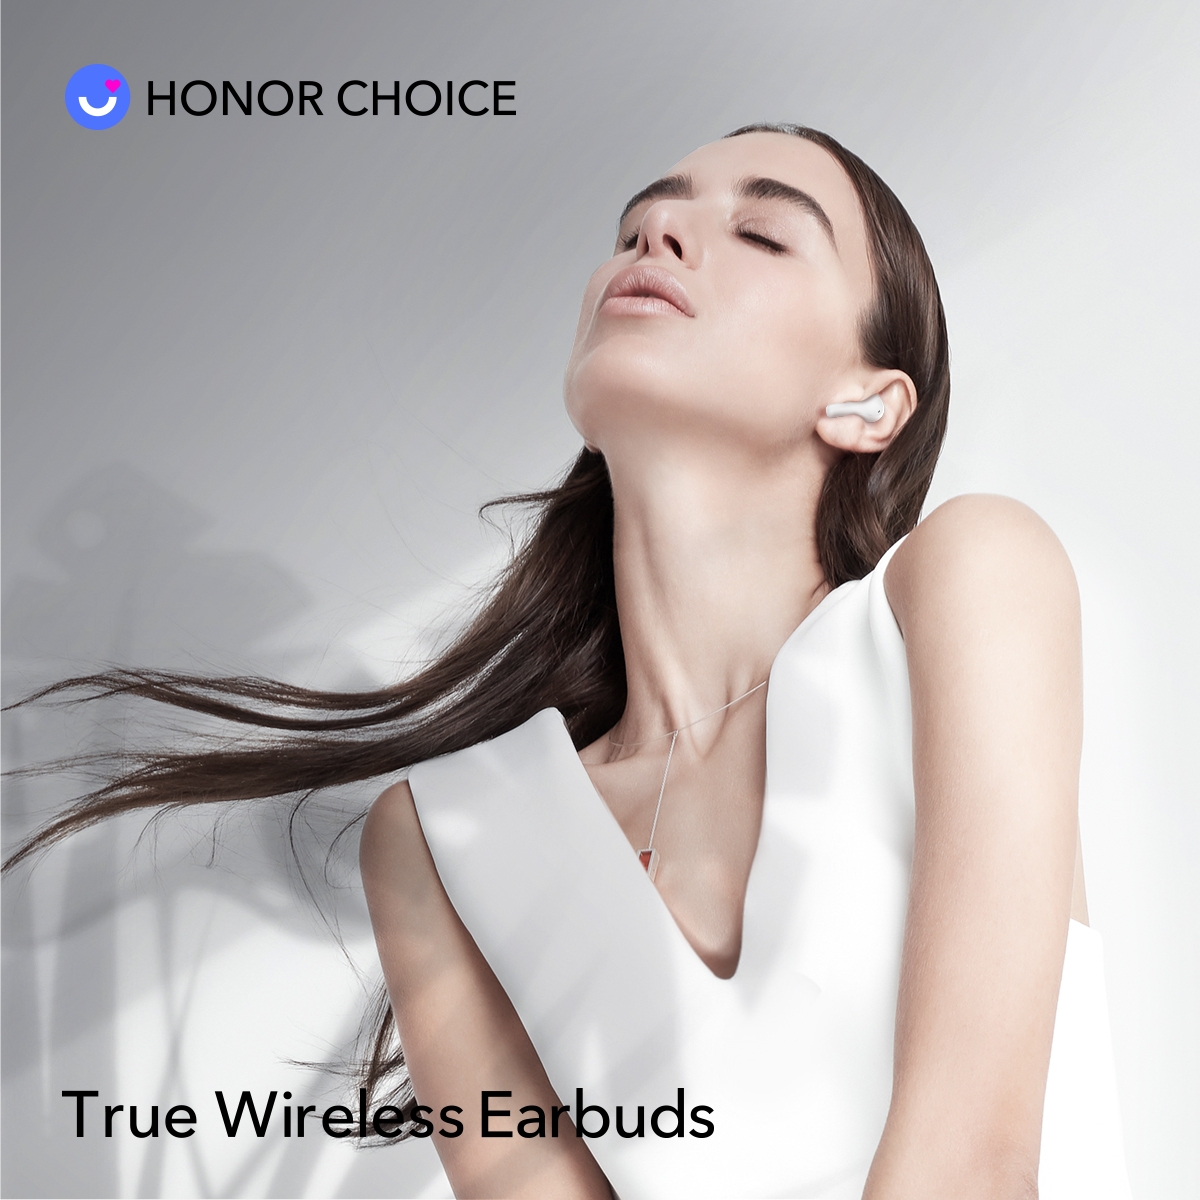 HONOR CHOICE True Wireless Earbuds 2 | CHOICE True Wireless Earbuds | HONOR เปิดจำหน่ายหูฟัง CHOICE True Wireless Earbuds รองรับ Bluetooth 5.0  ในราคาเพียง 849 บาท